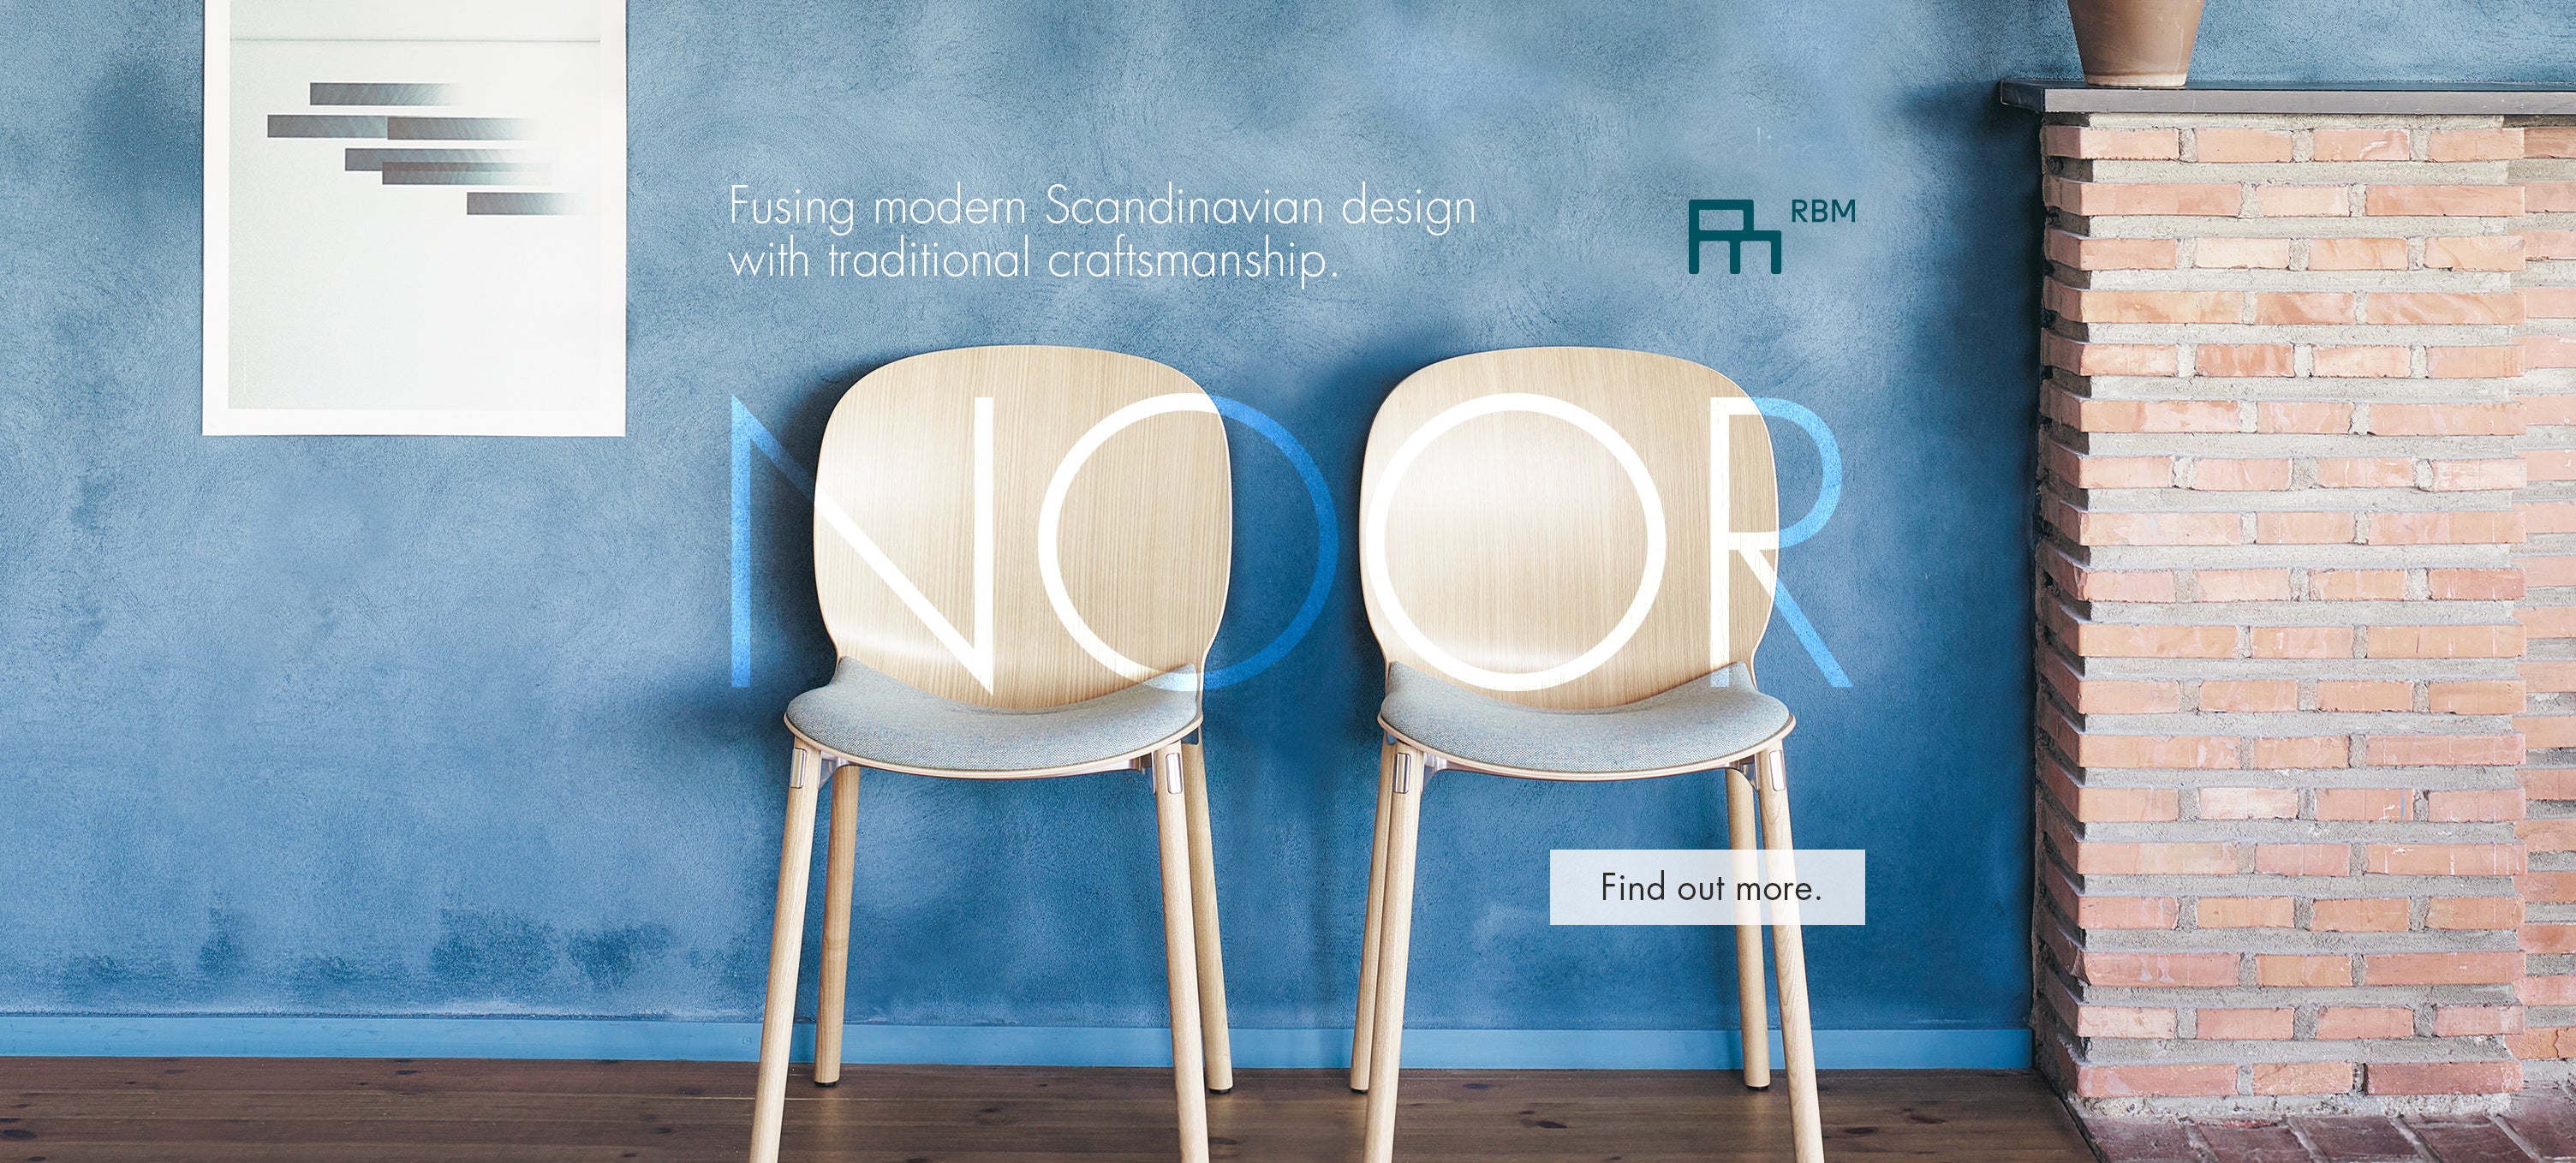 RBM Flokk Noor wooden chair